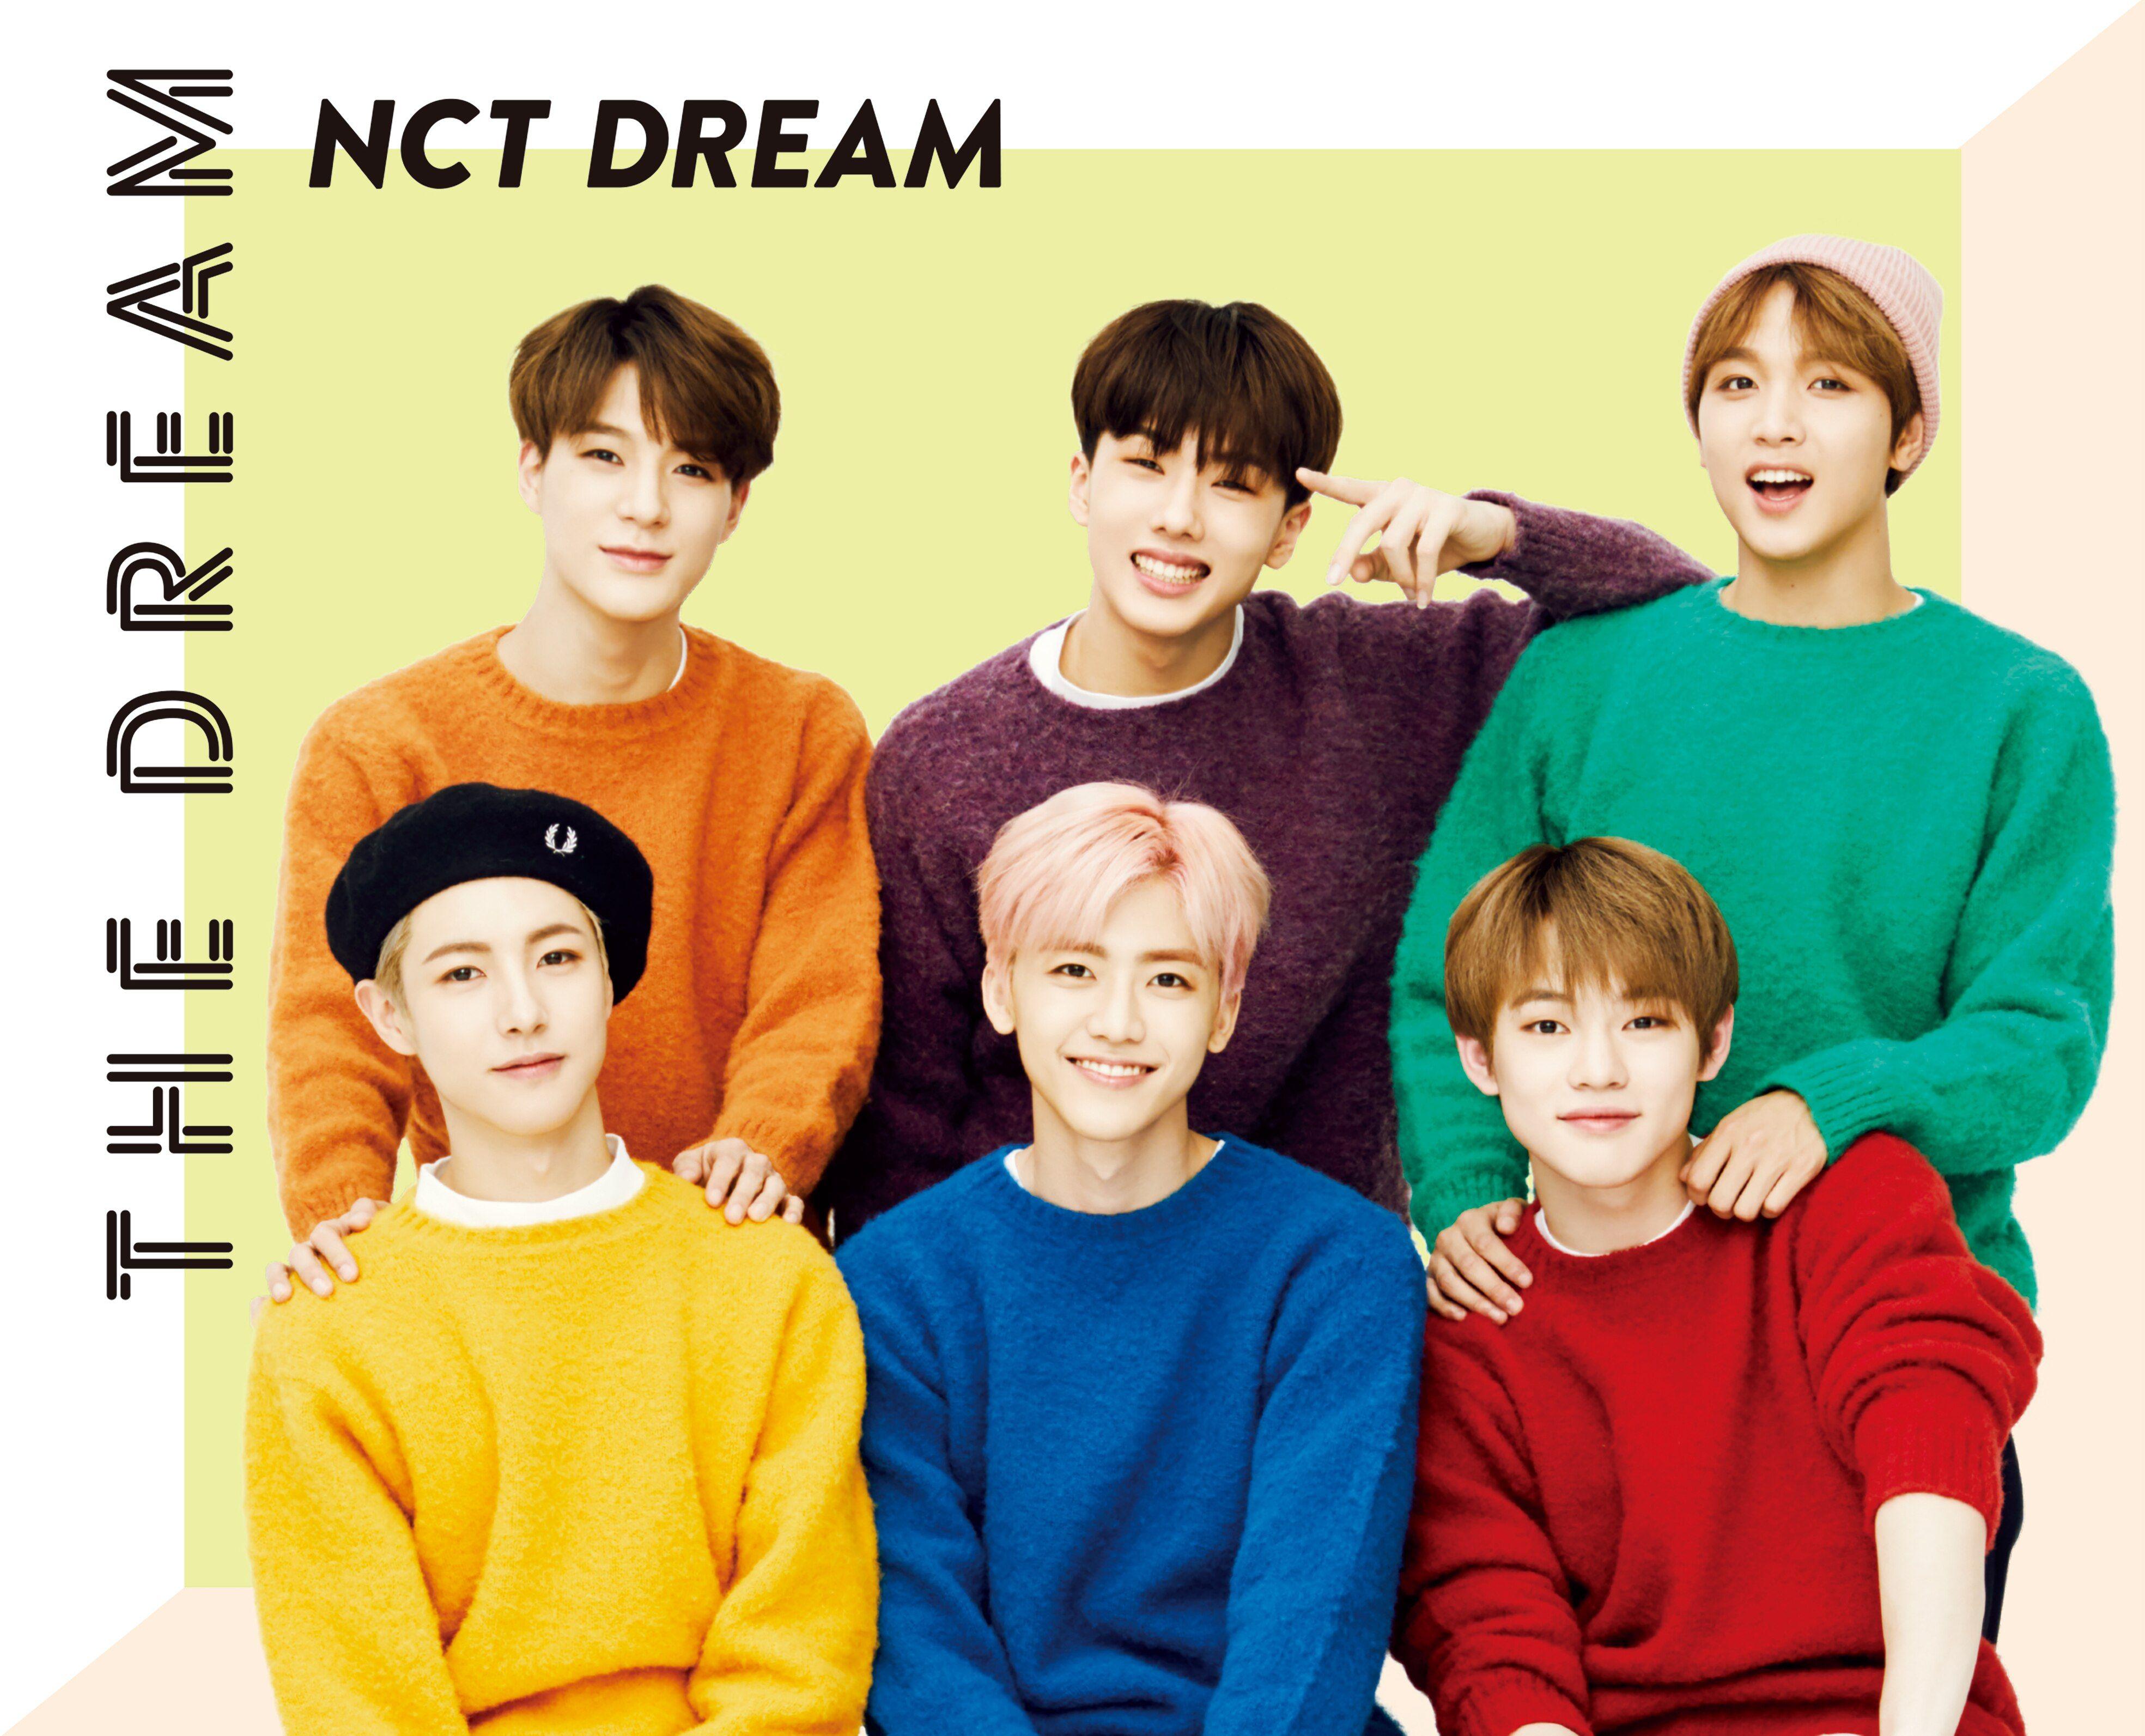 Nct dream dream scape. NCT Dream 2018. NCT Dream 2024. NCT 2020. NCT Dream визуал.